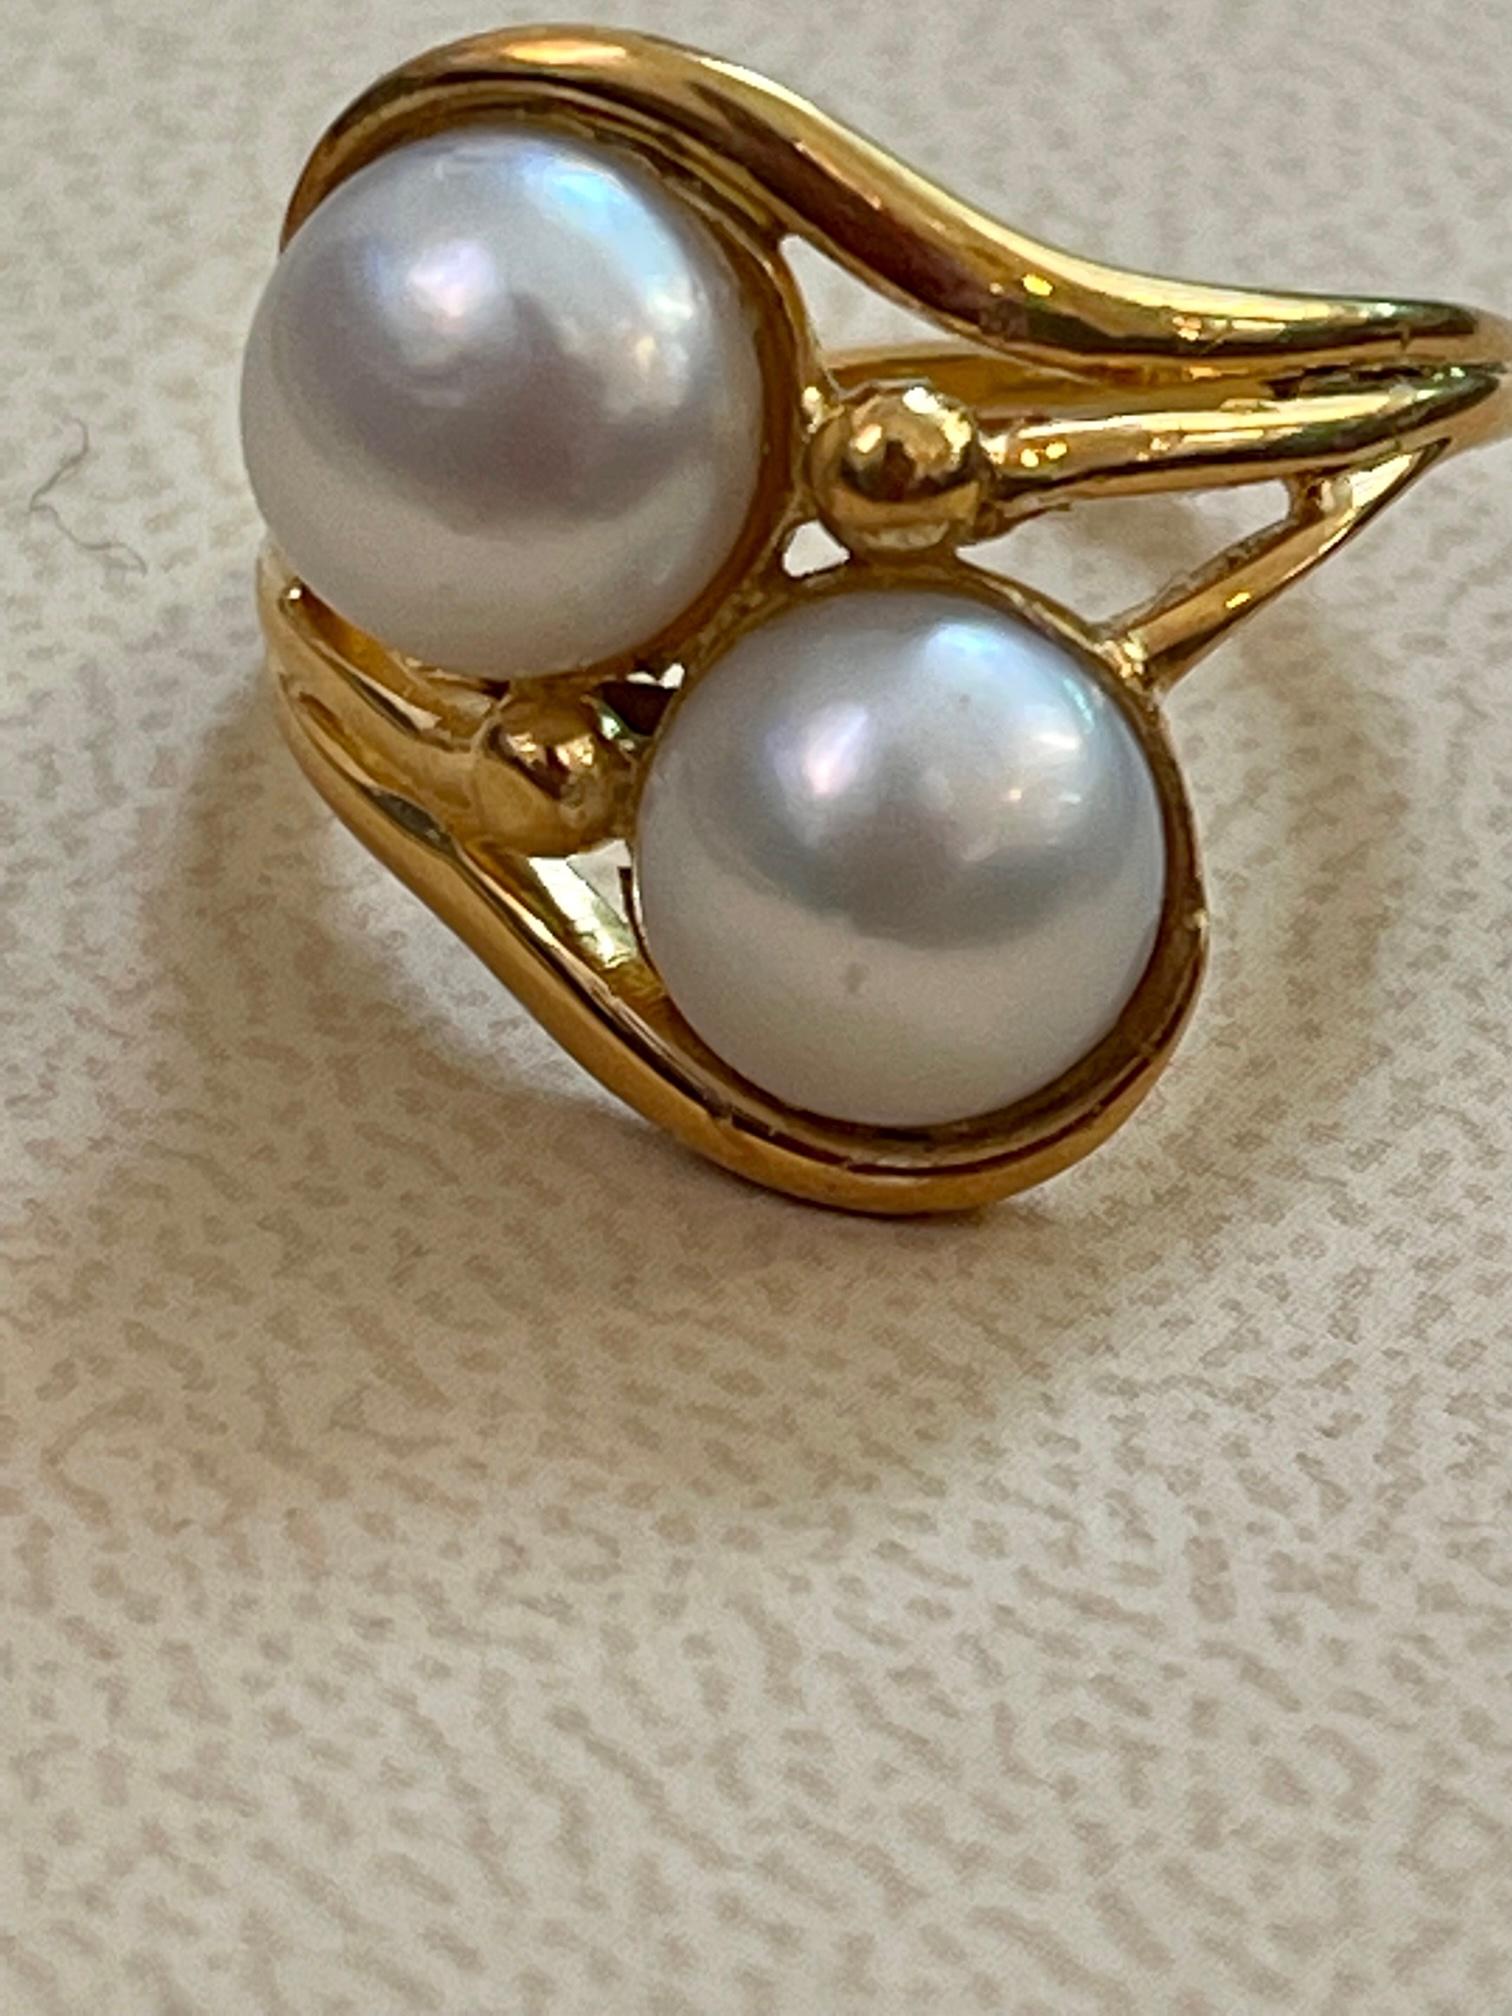 2 pearl ring